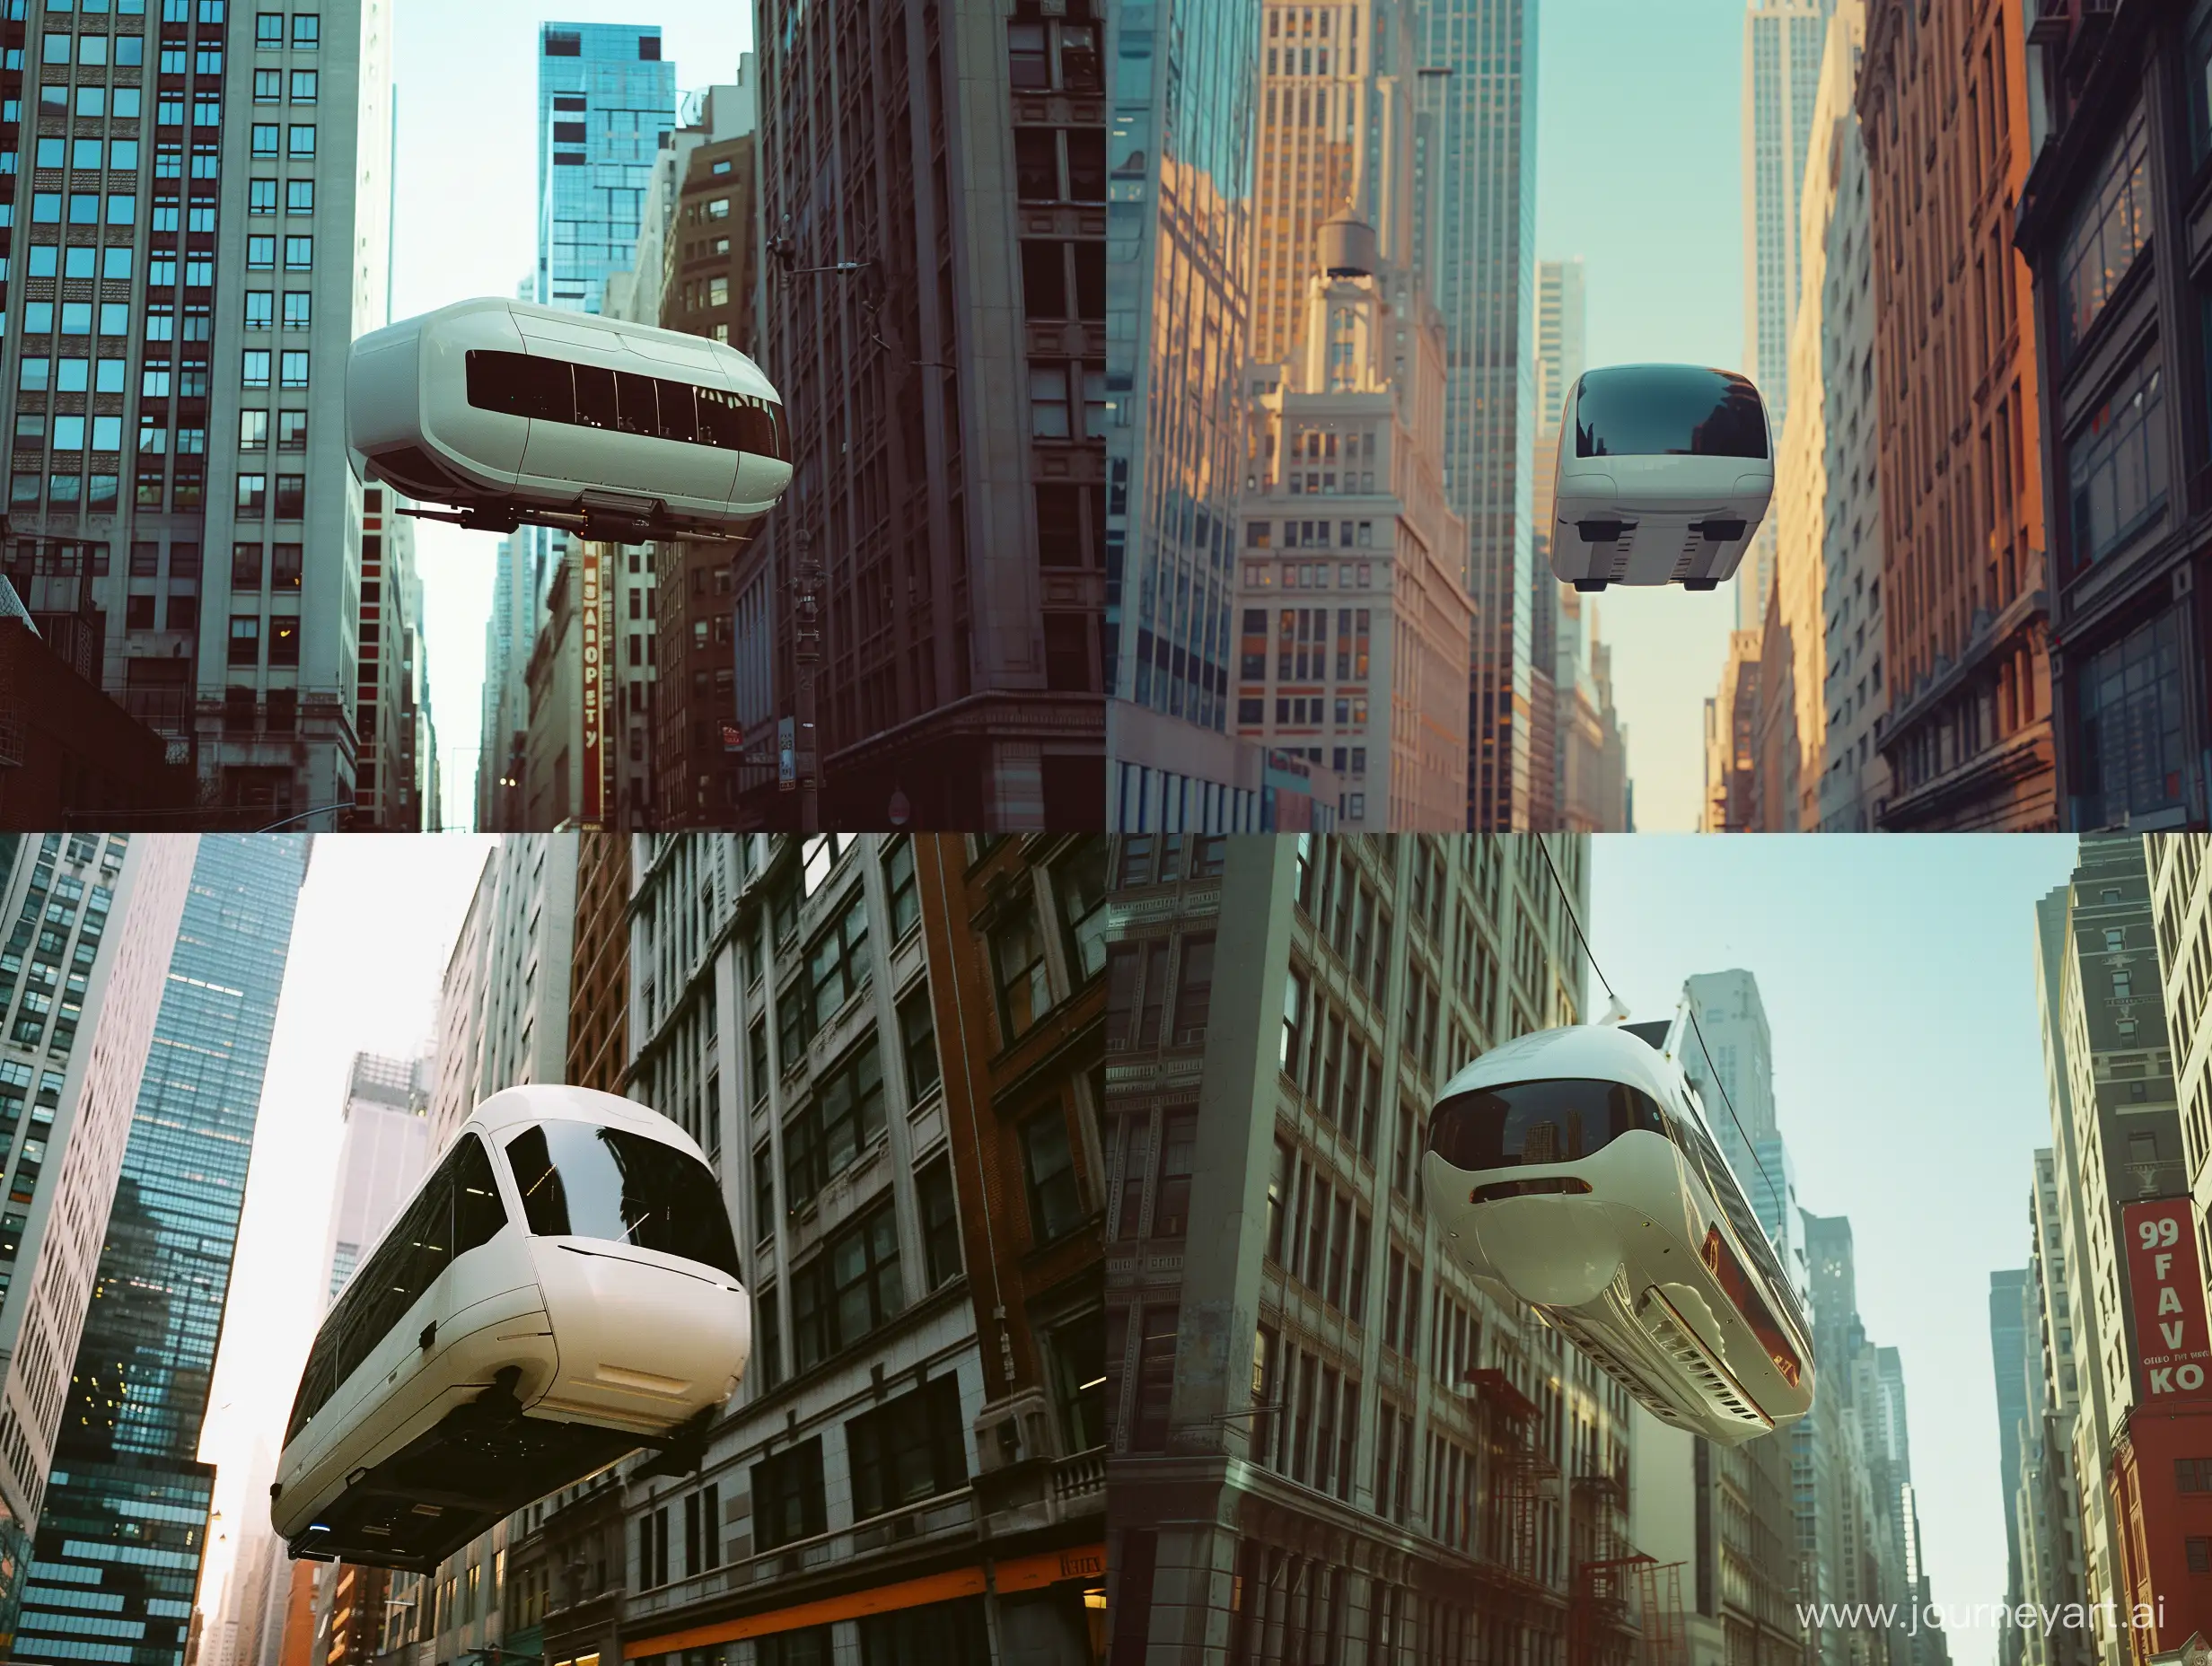 Futuristic-Electric-Autonomous-Bus-Soaring-Through-New-York-City-Skyline